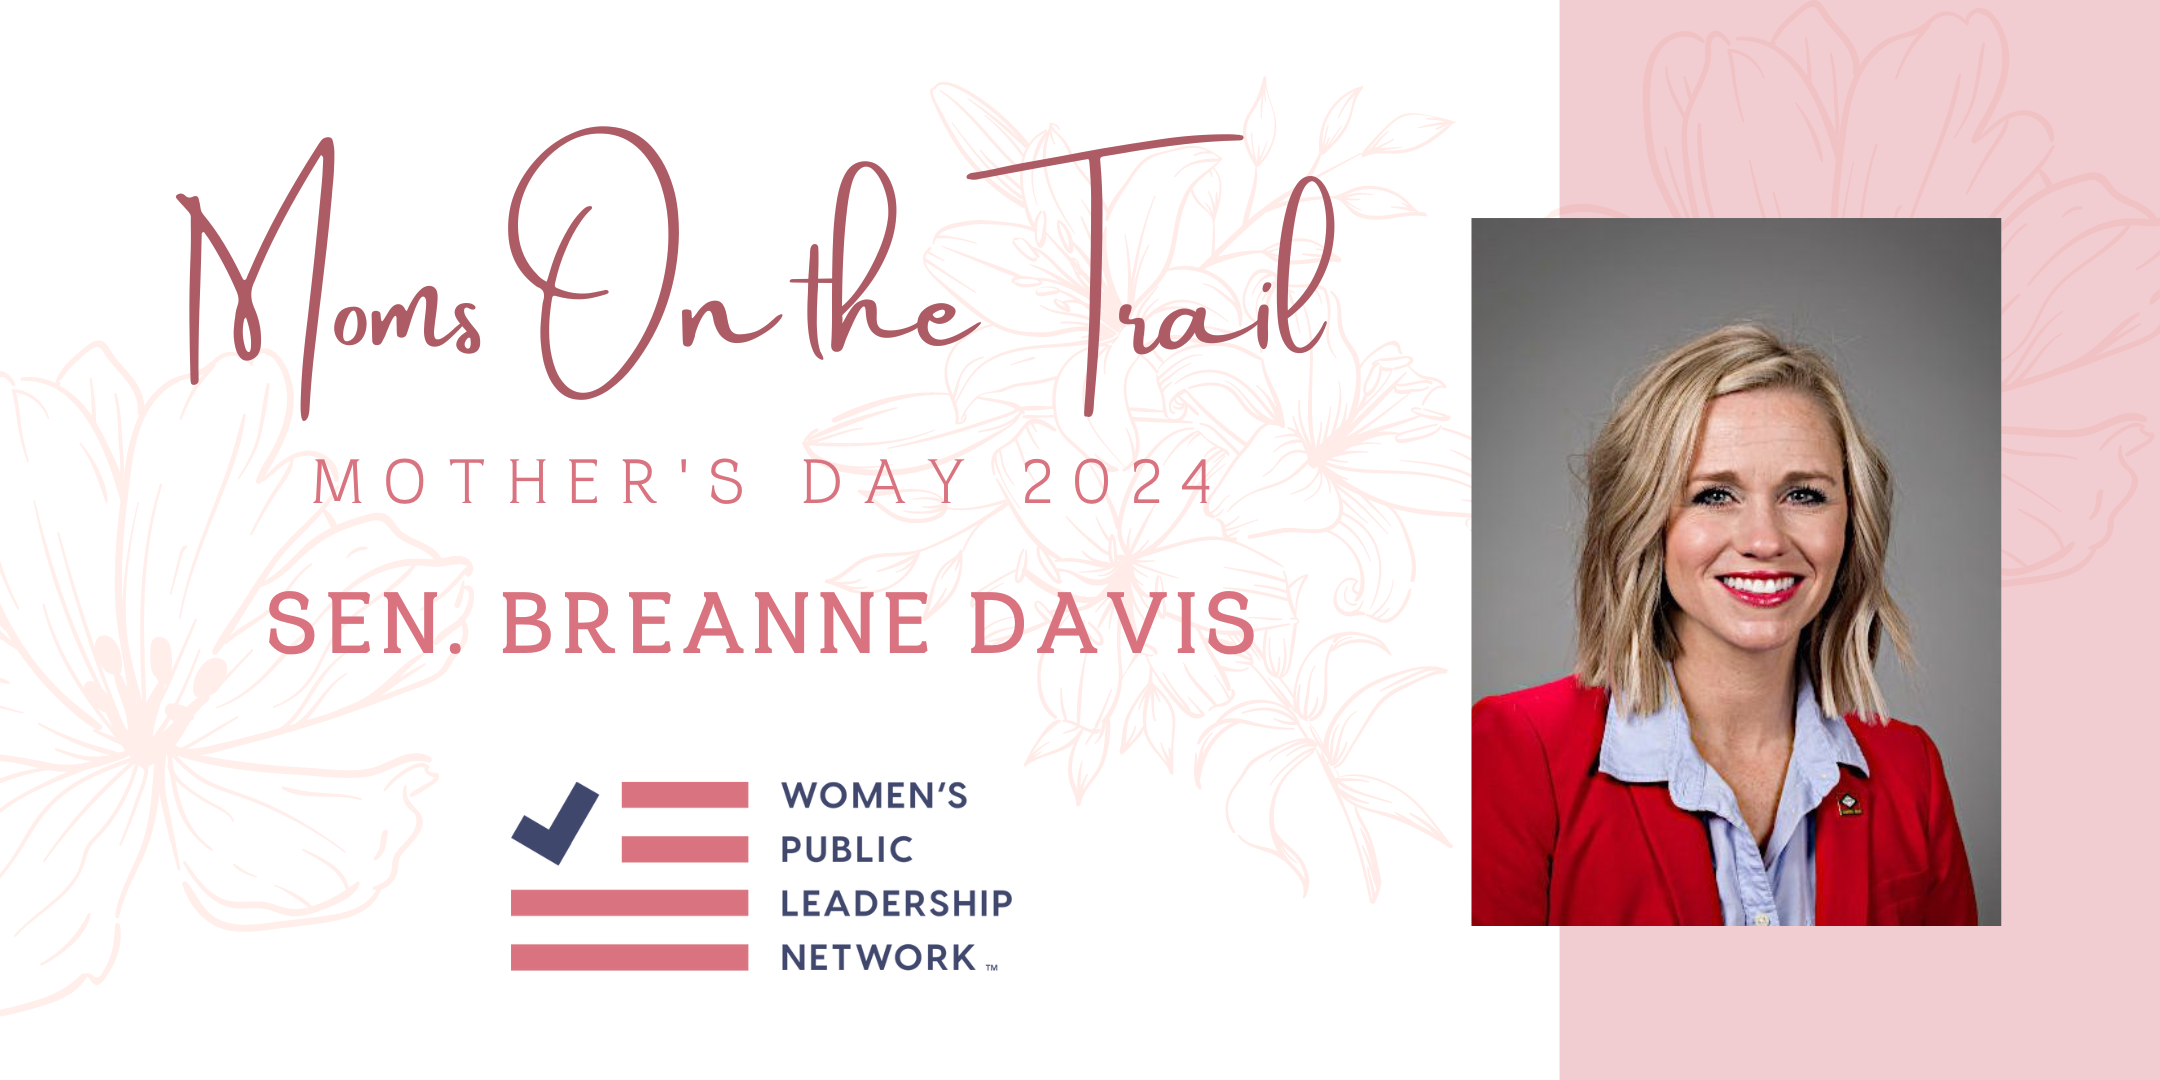 Celebrating Moms On the Trail: Breanne Davis